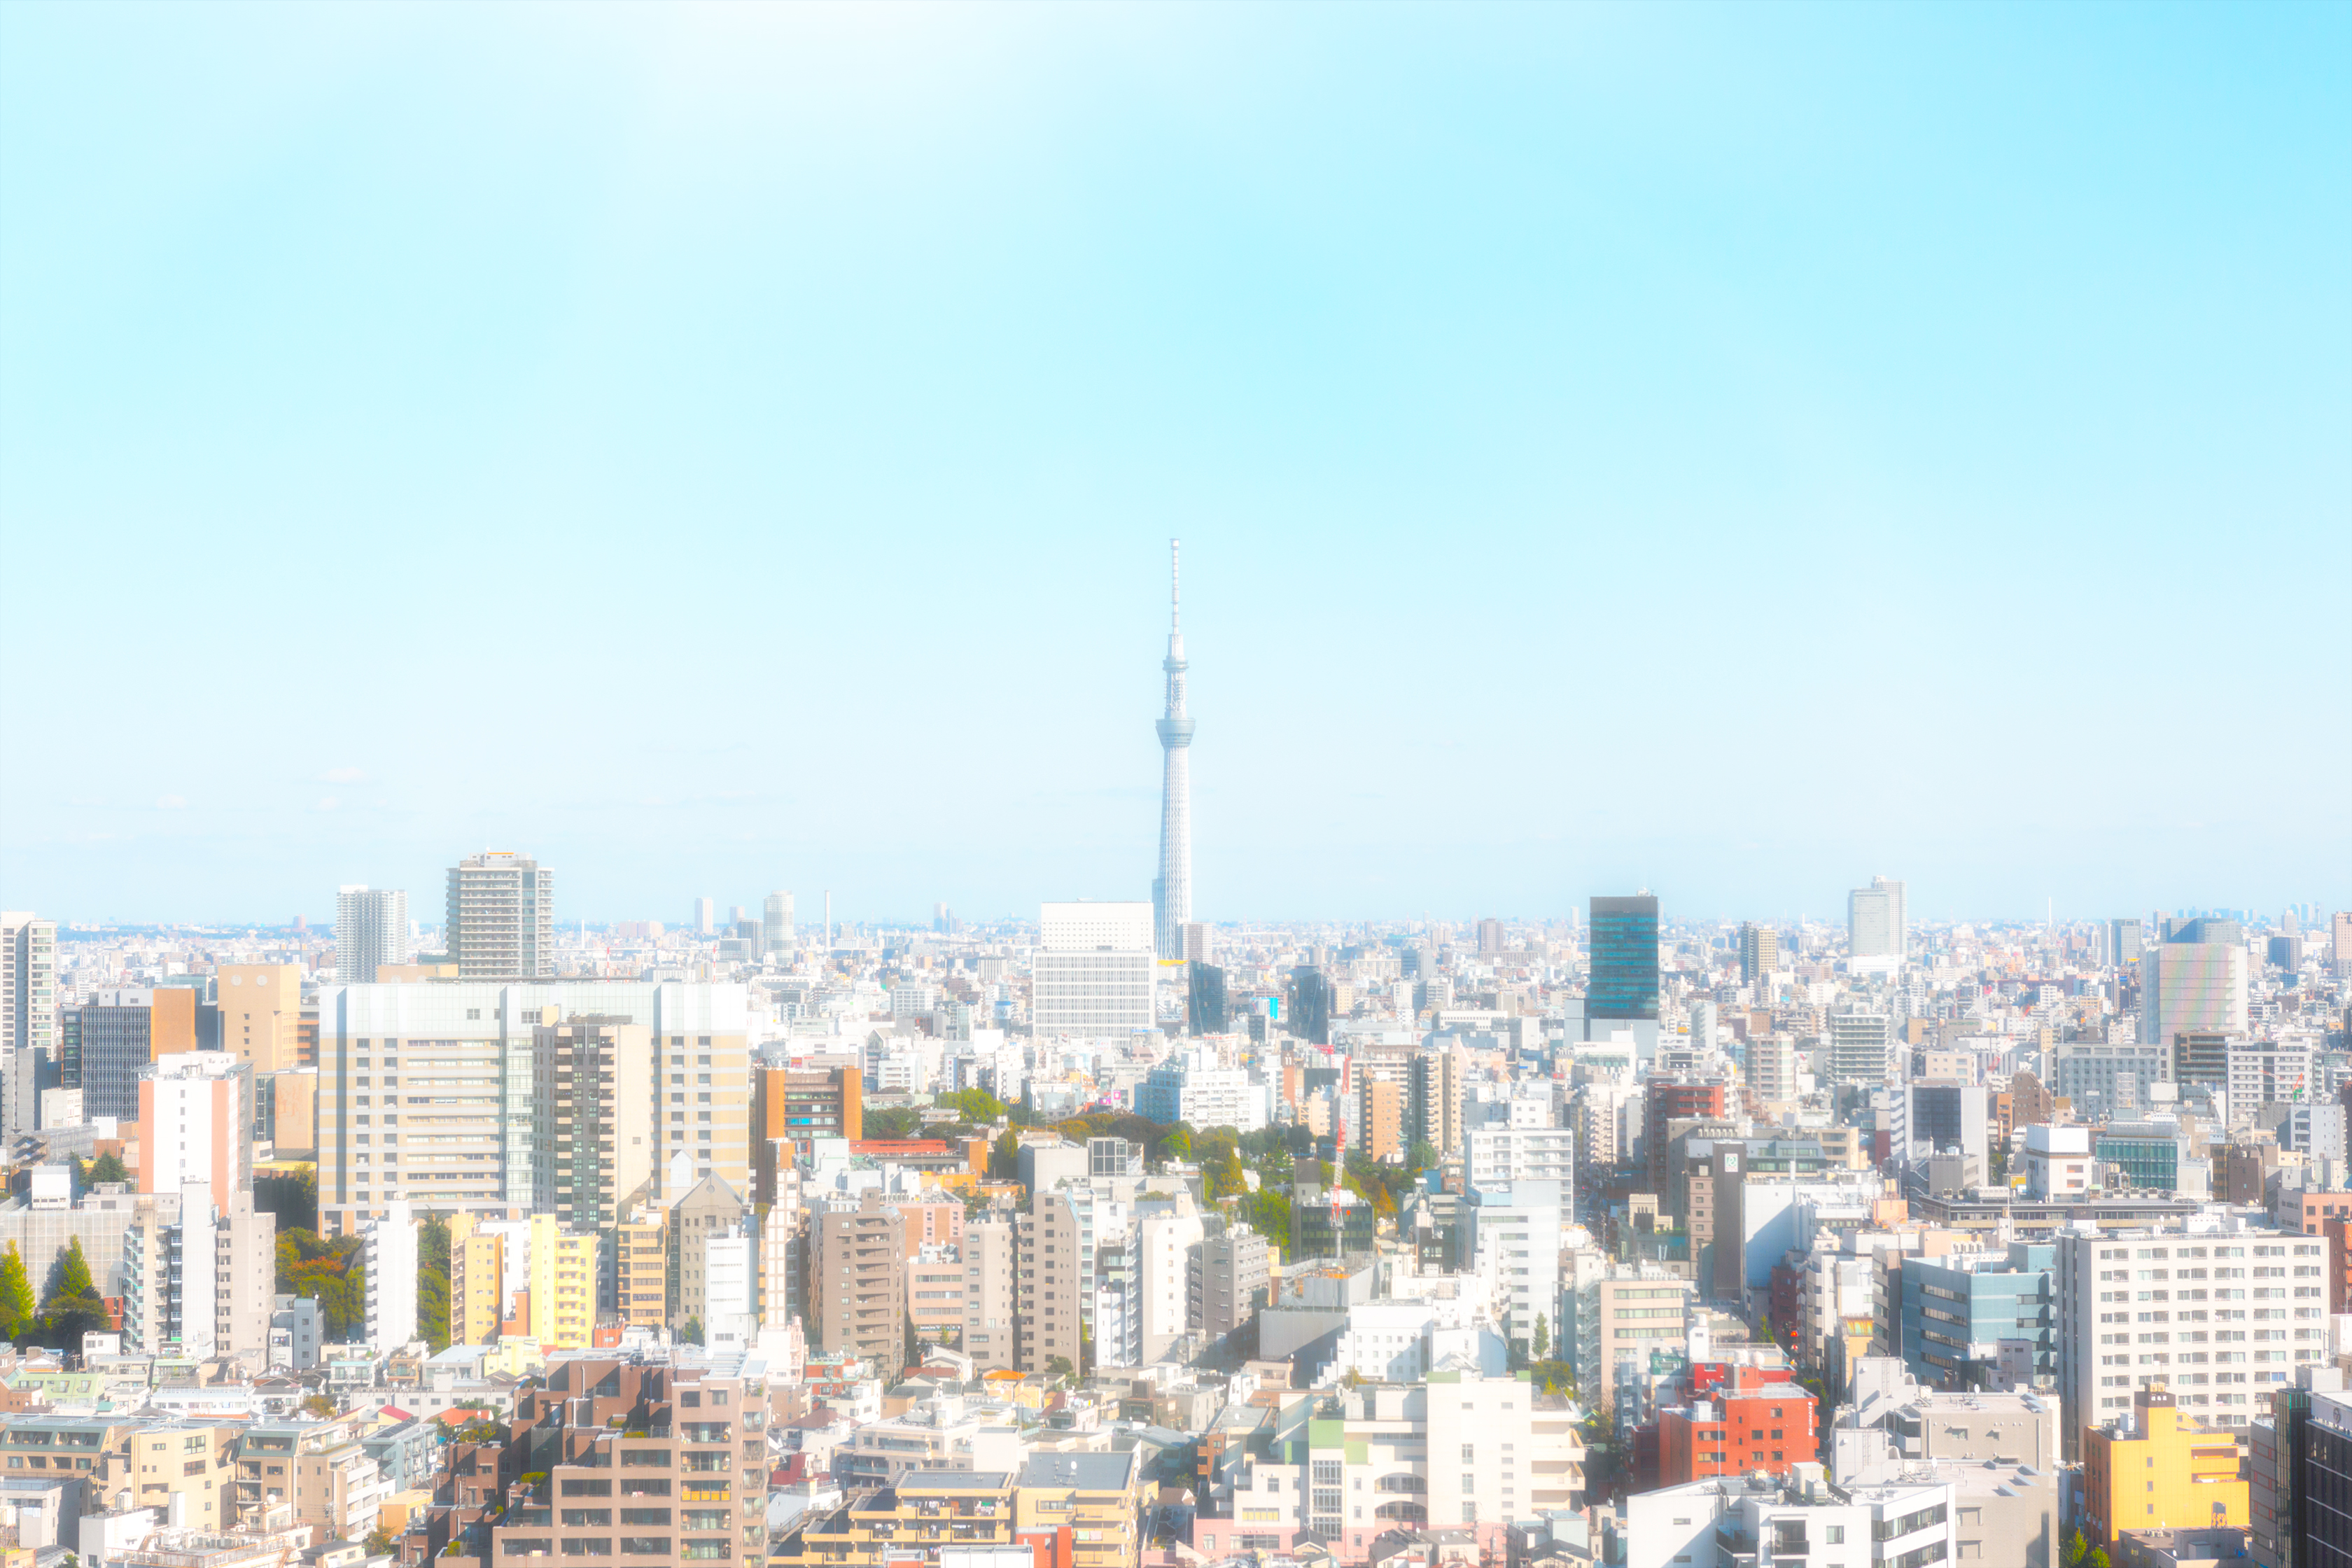 General 3360x2240 Tokyo Skytree Tokyo animation tower overexposed digital art